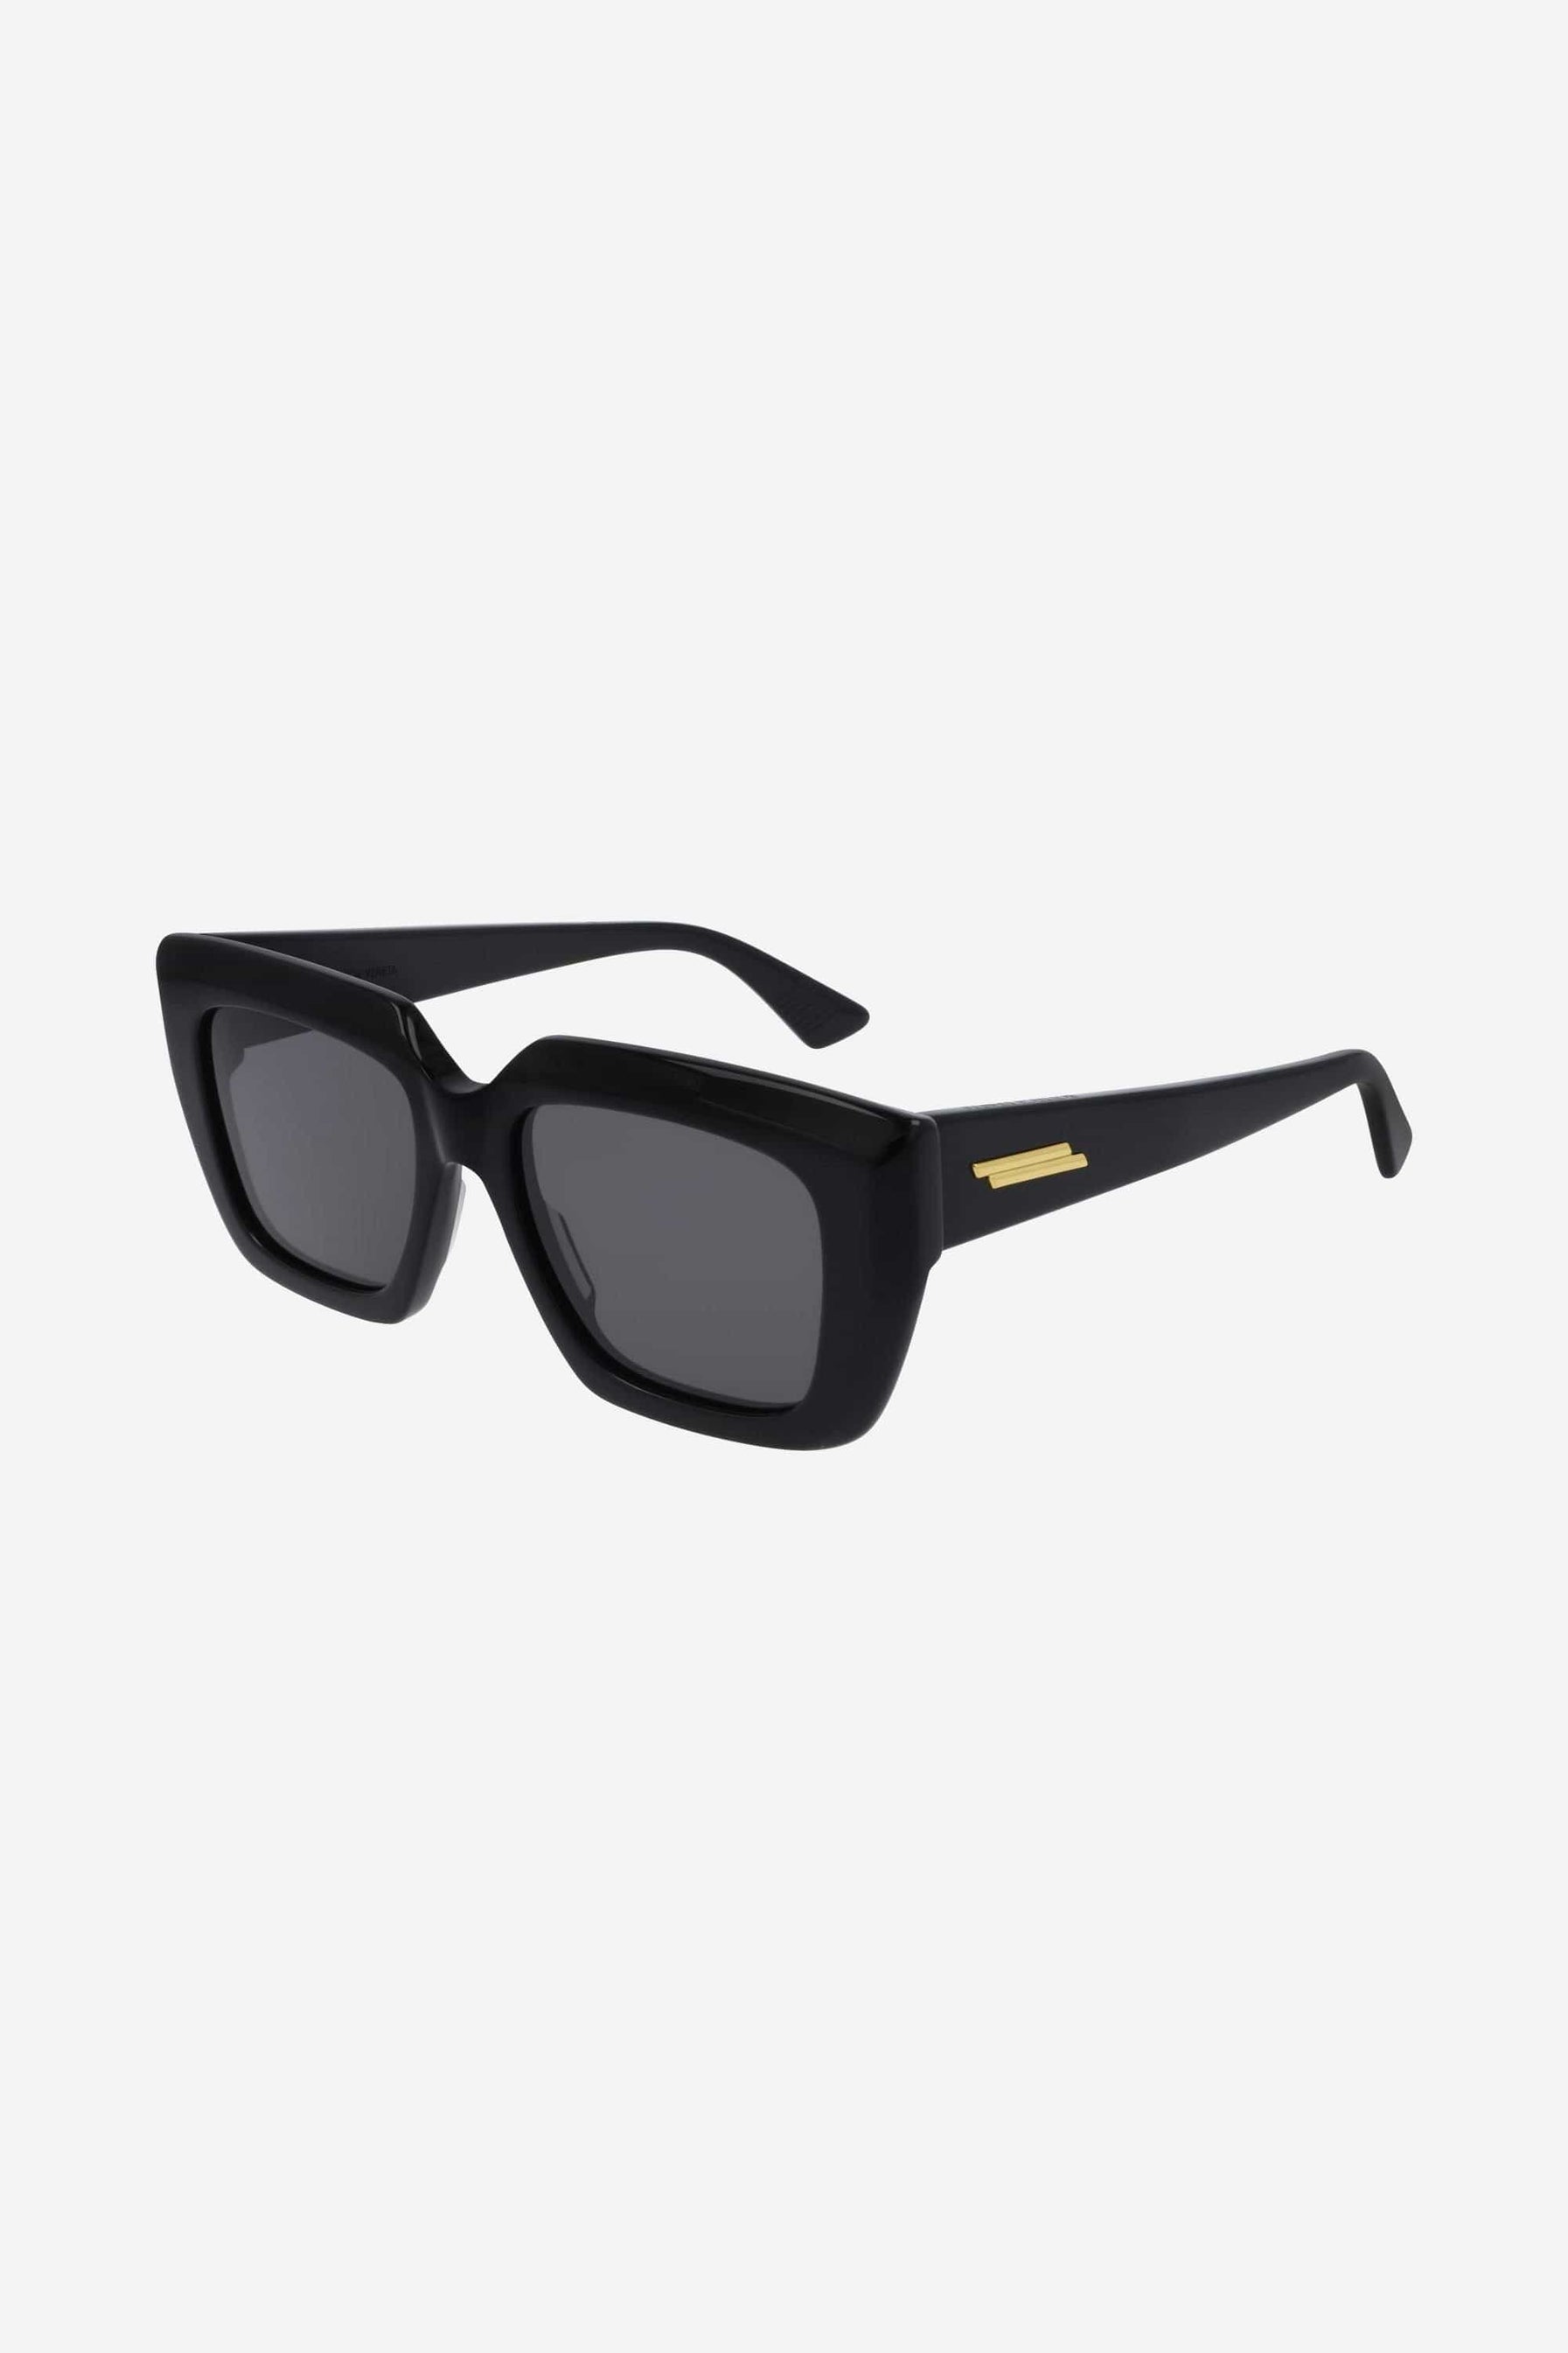 Bottega Veneta bold acetate femenine black sunglasses - Eyewear Club